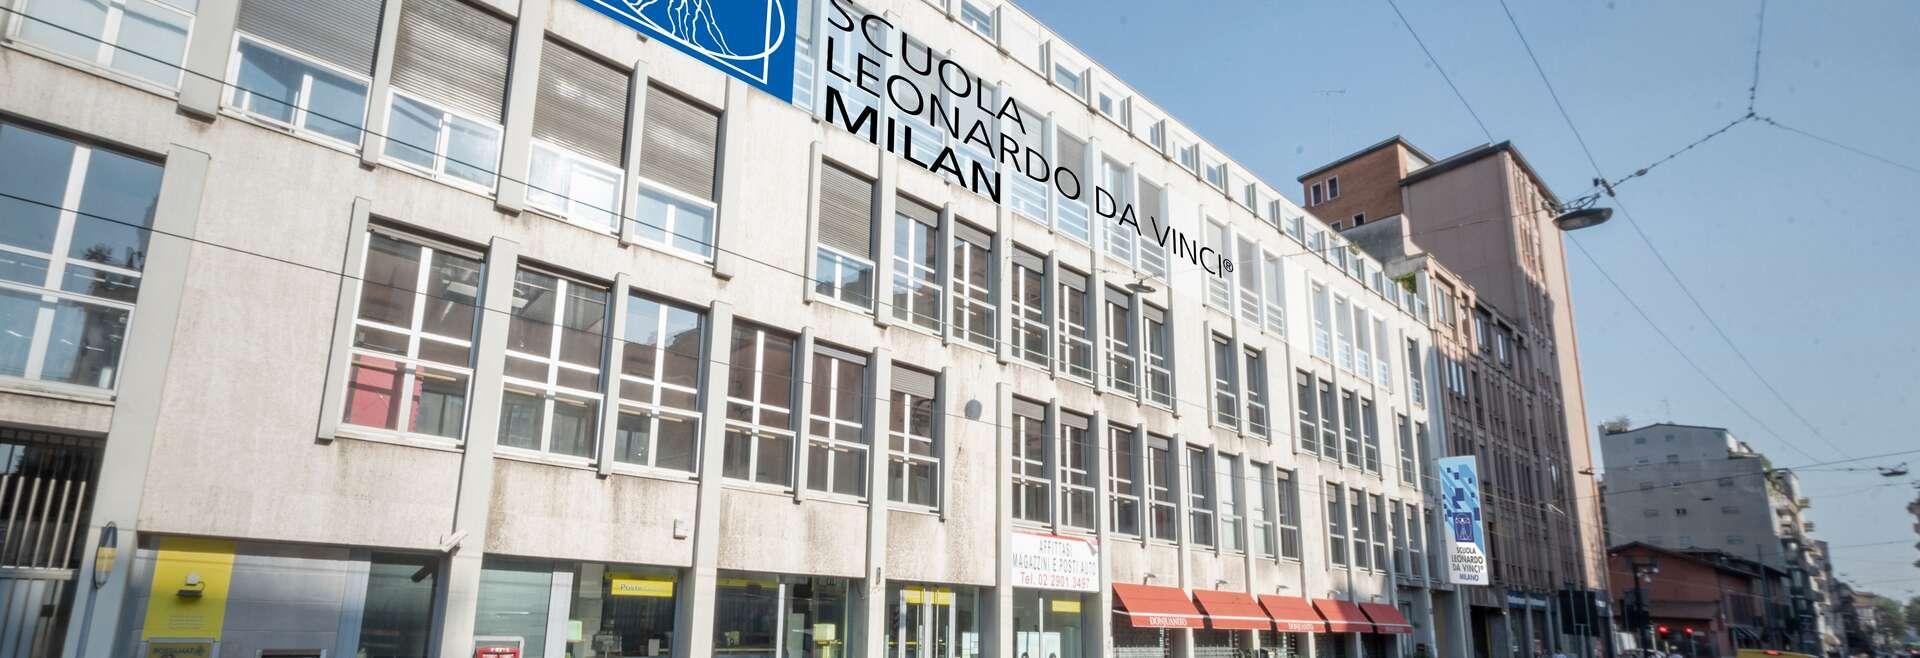 Séjour linguistique Italie, Milano - Scuola Leonardo da Vinci Milano - École